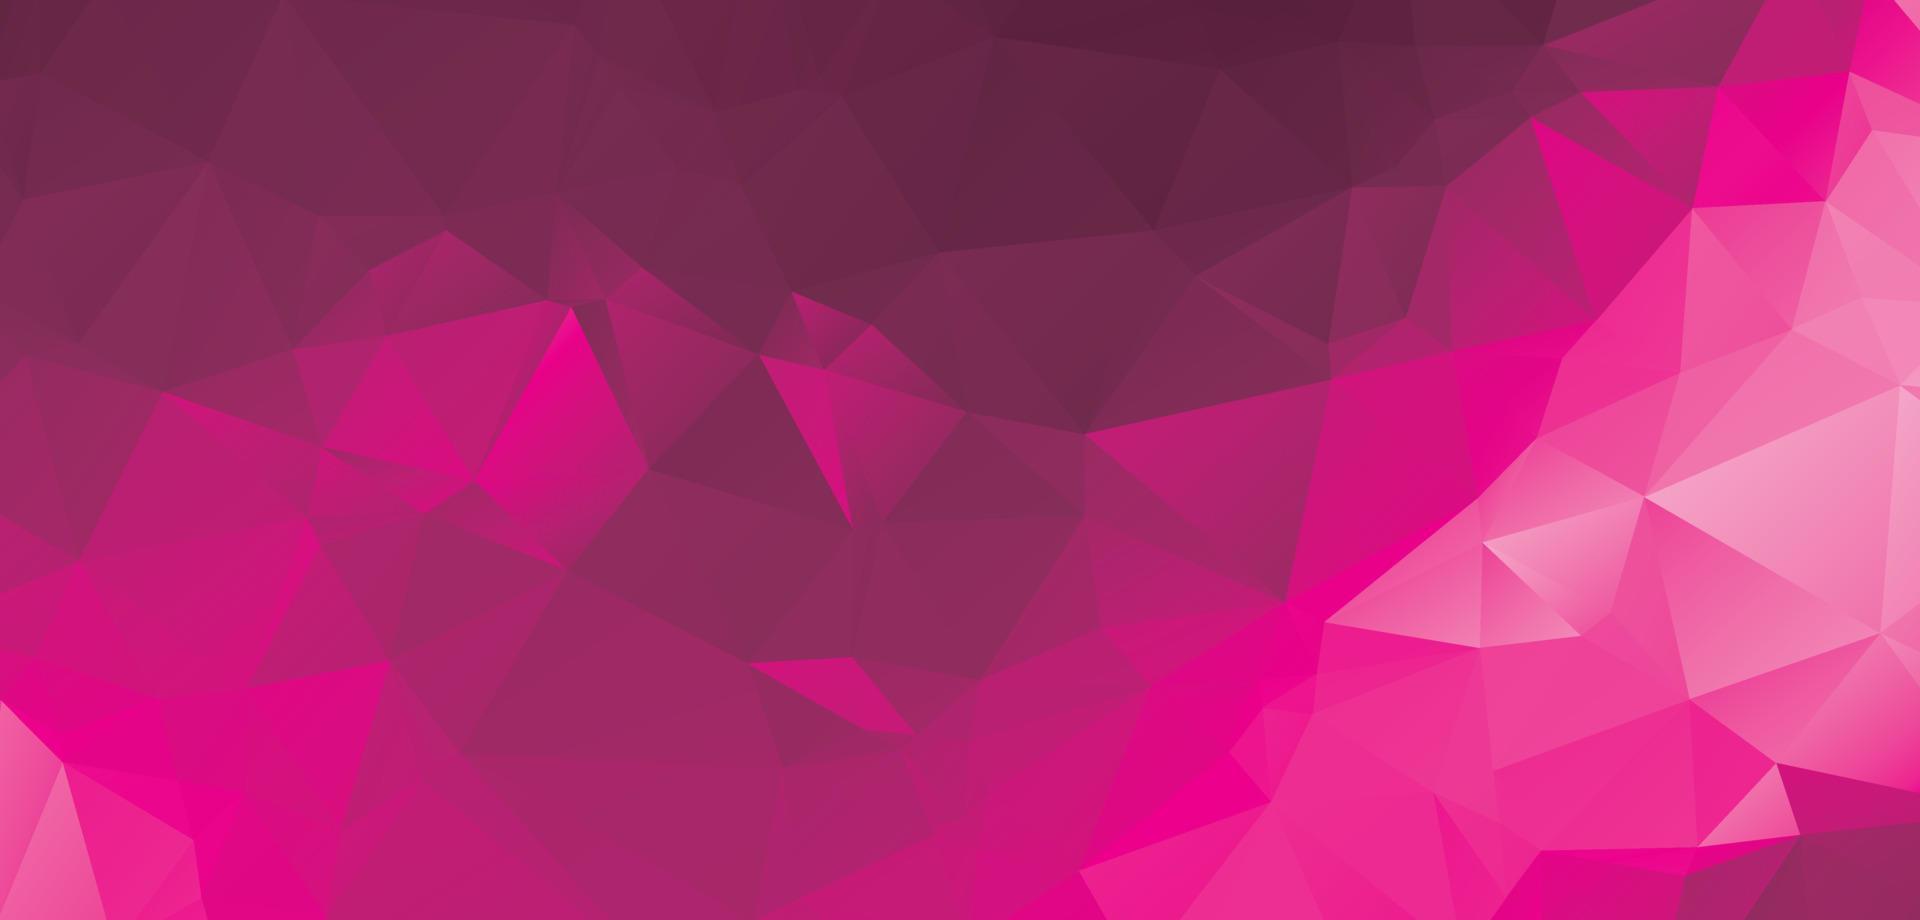 fundo rosa pastel sombra poli cristal diamante meio-tom arco-íris gradiente futurista padrão mínimo vetor